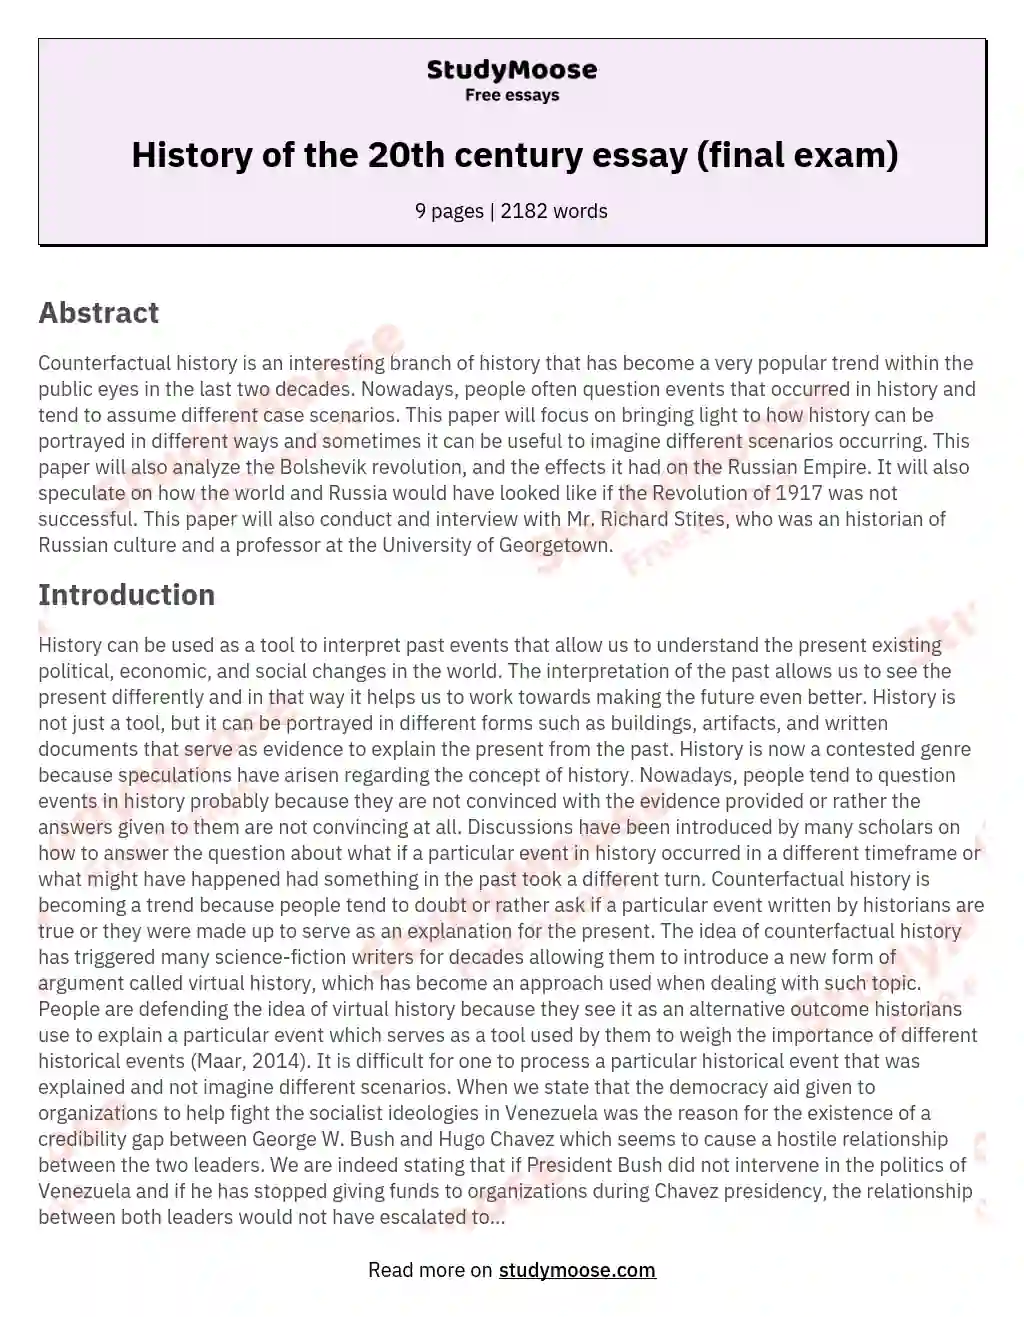 History of the 20th century essay (final exam) essay